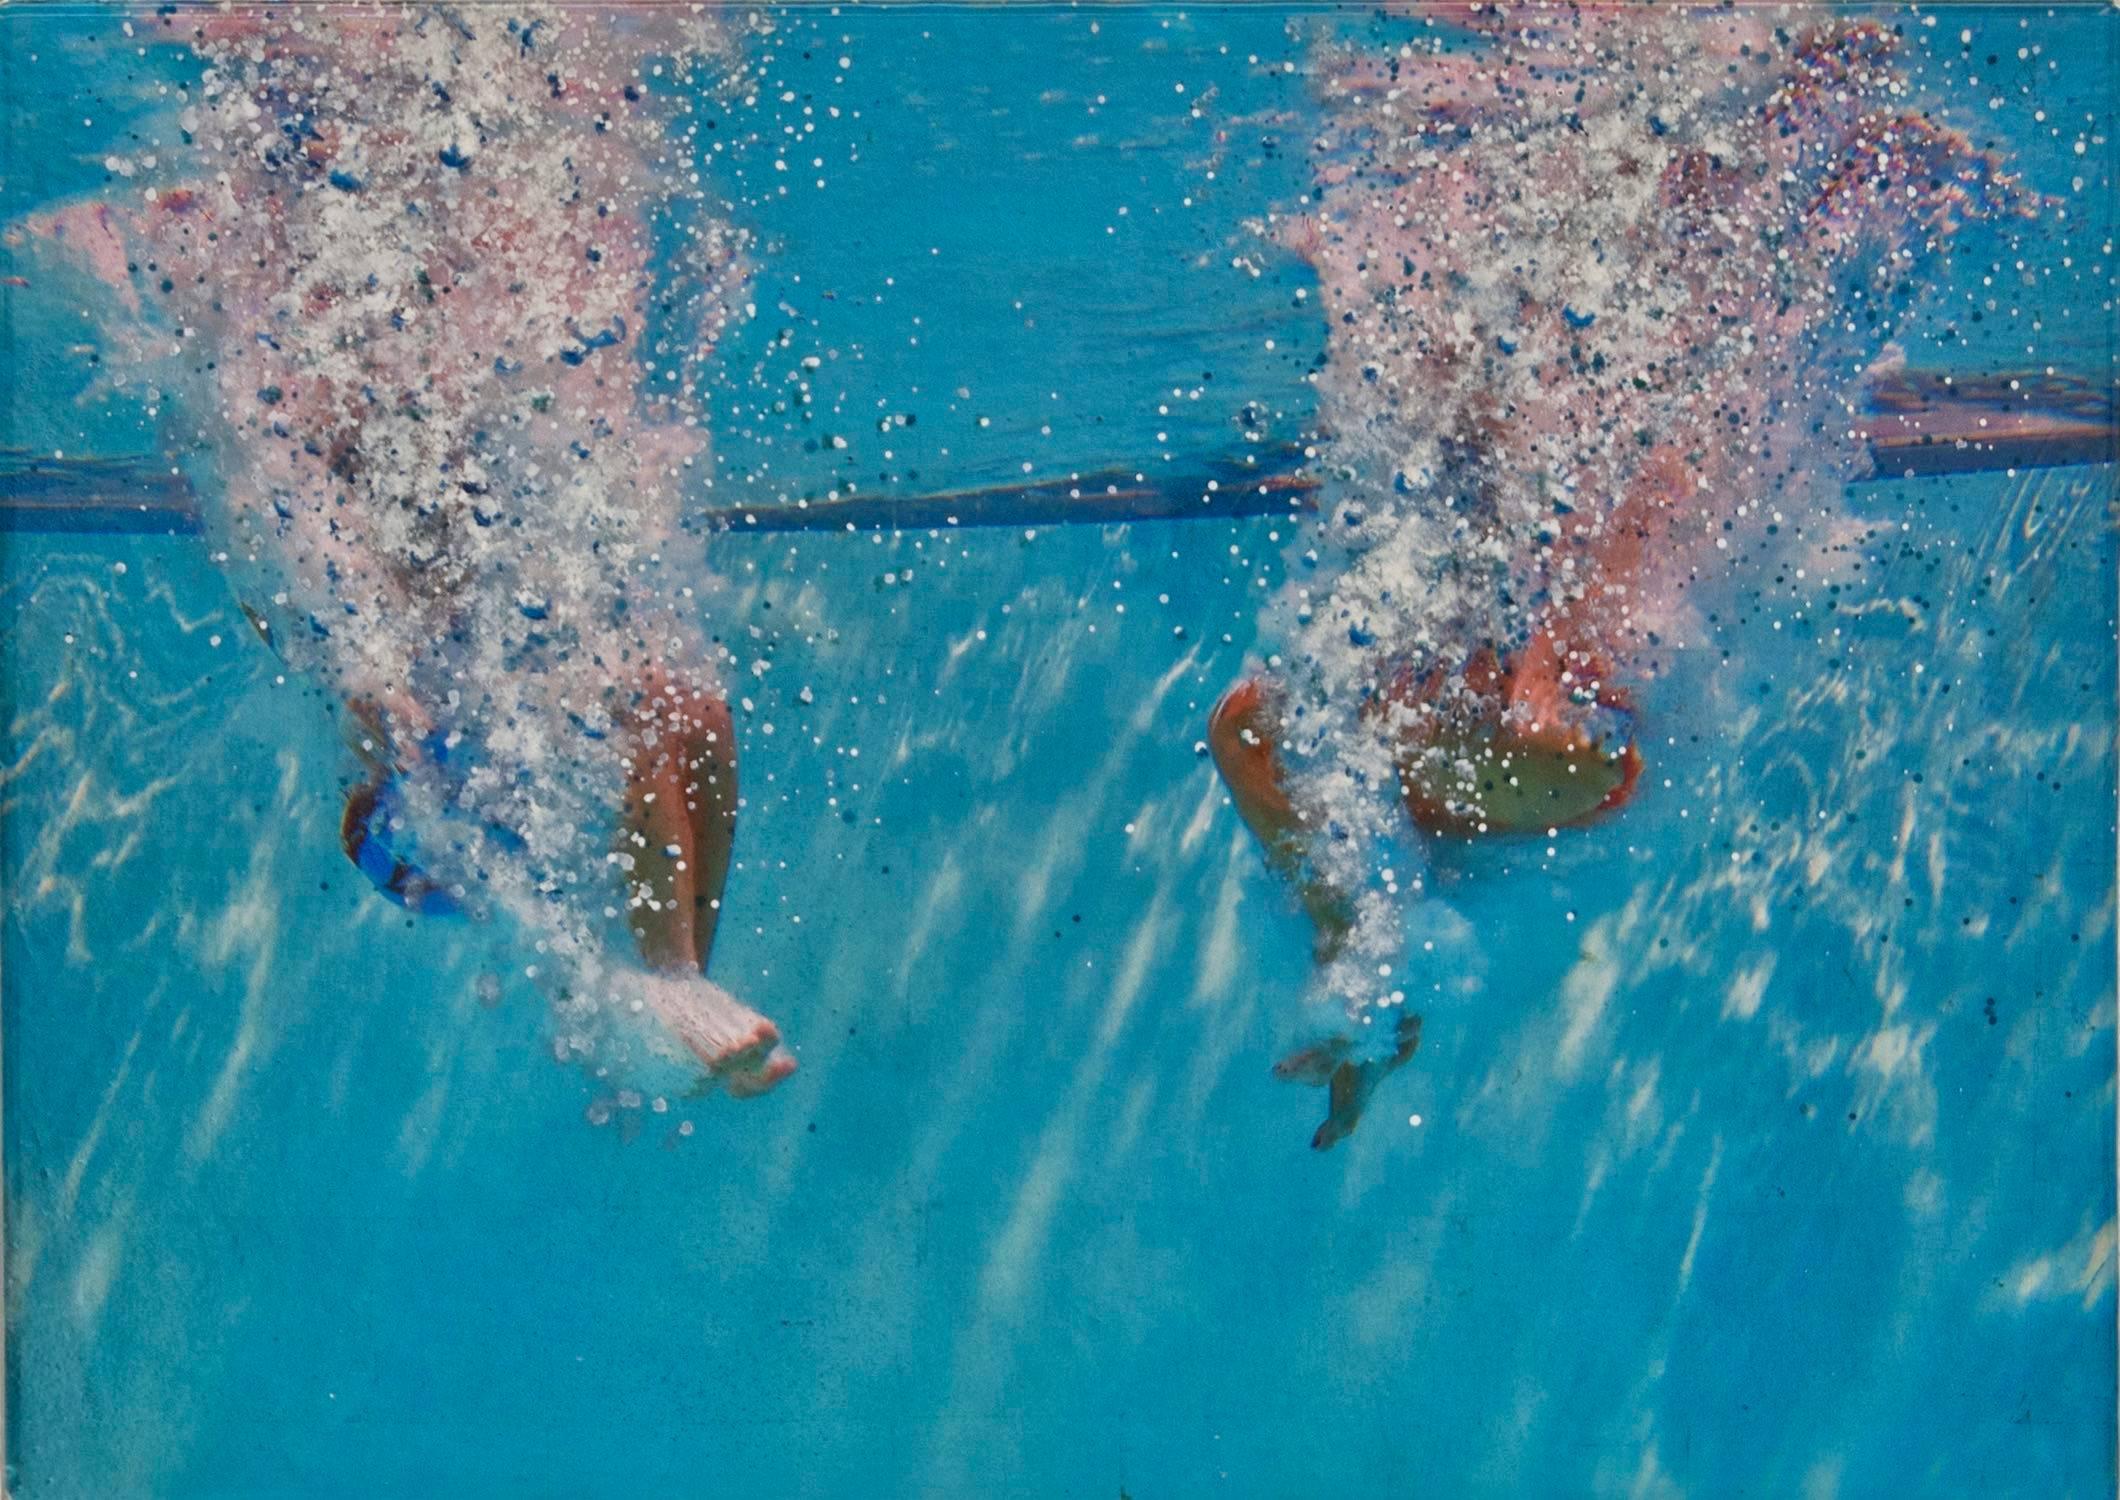 Splash Study - Blue Water - Mixed Media Art by Eric Zener